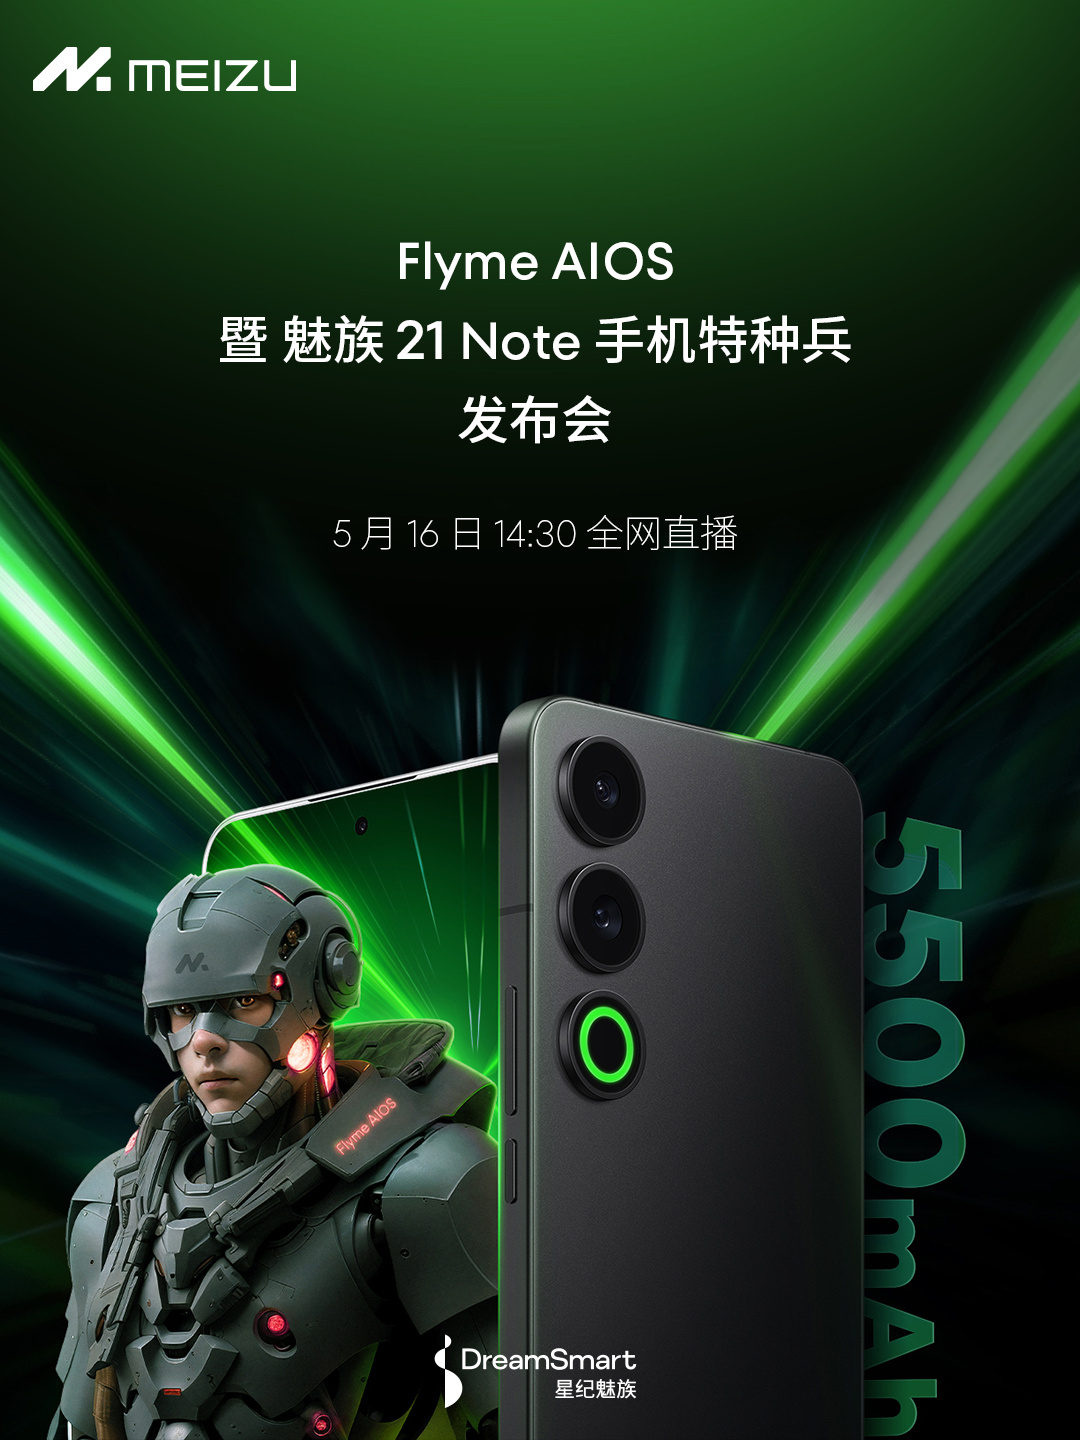 Flyme AIOS 暨魅族 21 Note 手机特种兵发布会 5 月 16 日举行